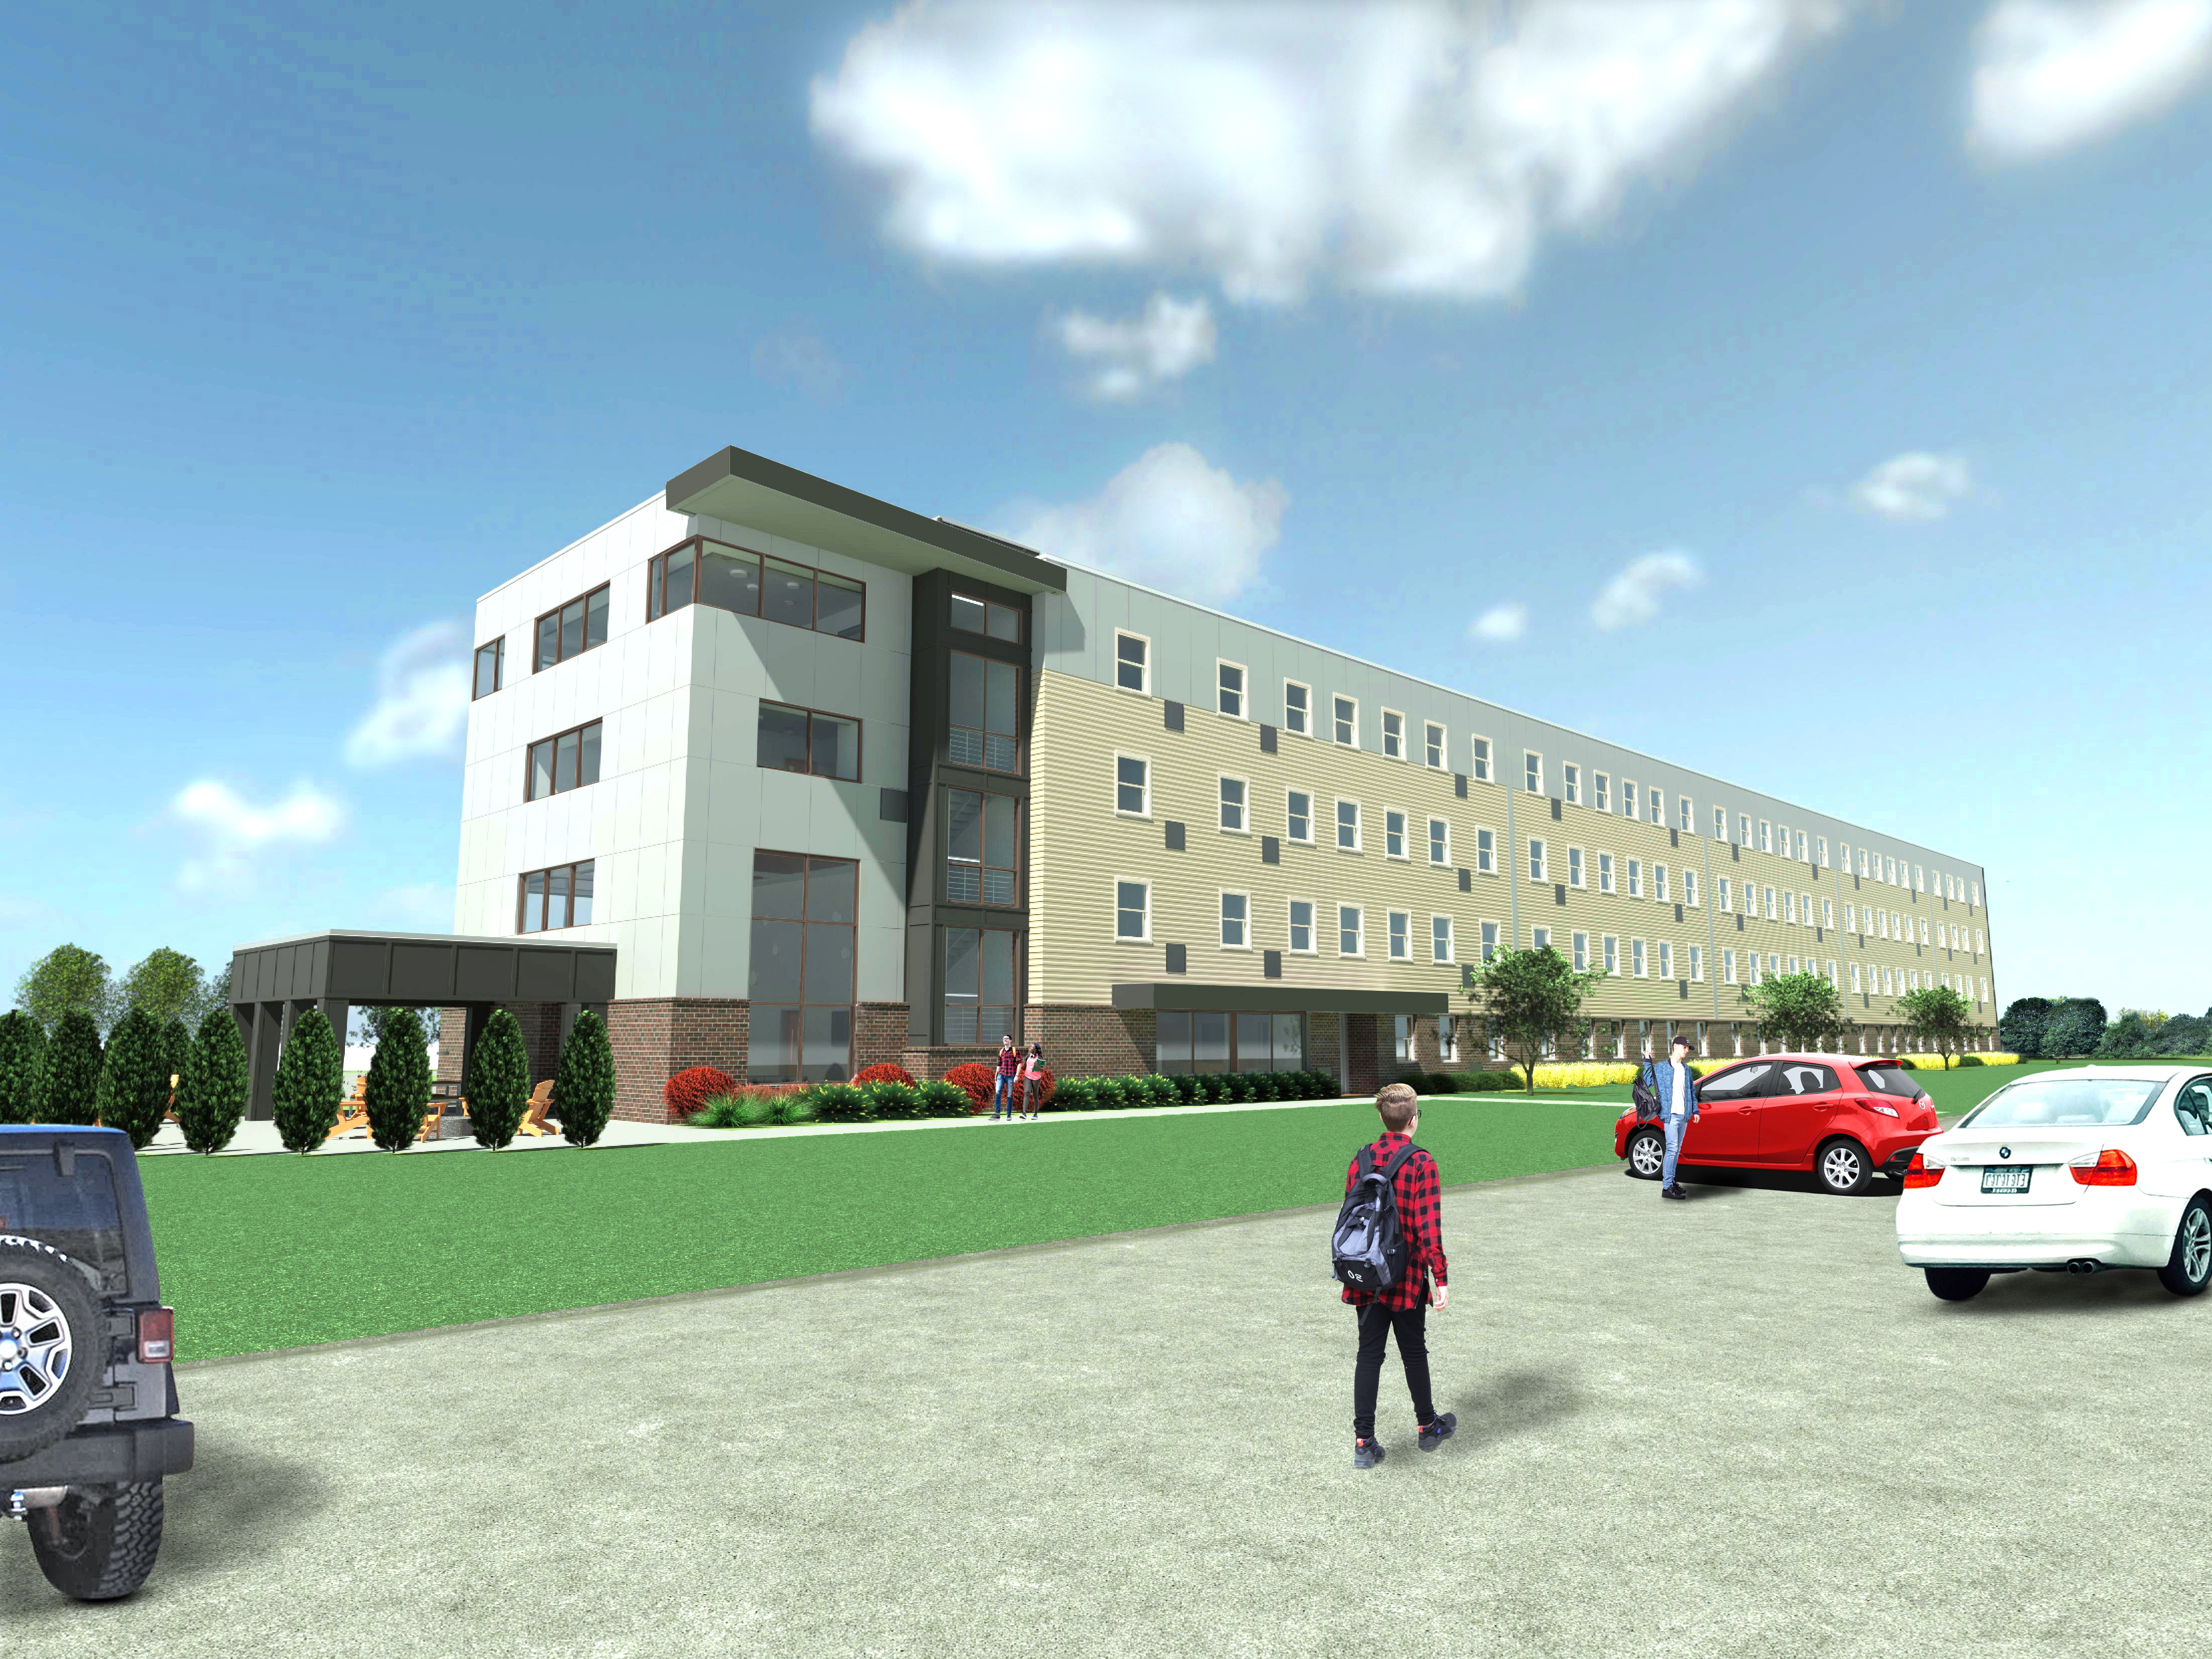 ATCC Foundation Student Housing Design exterior view 01m